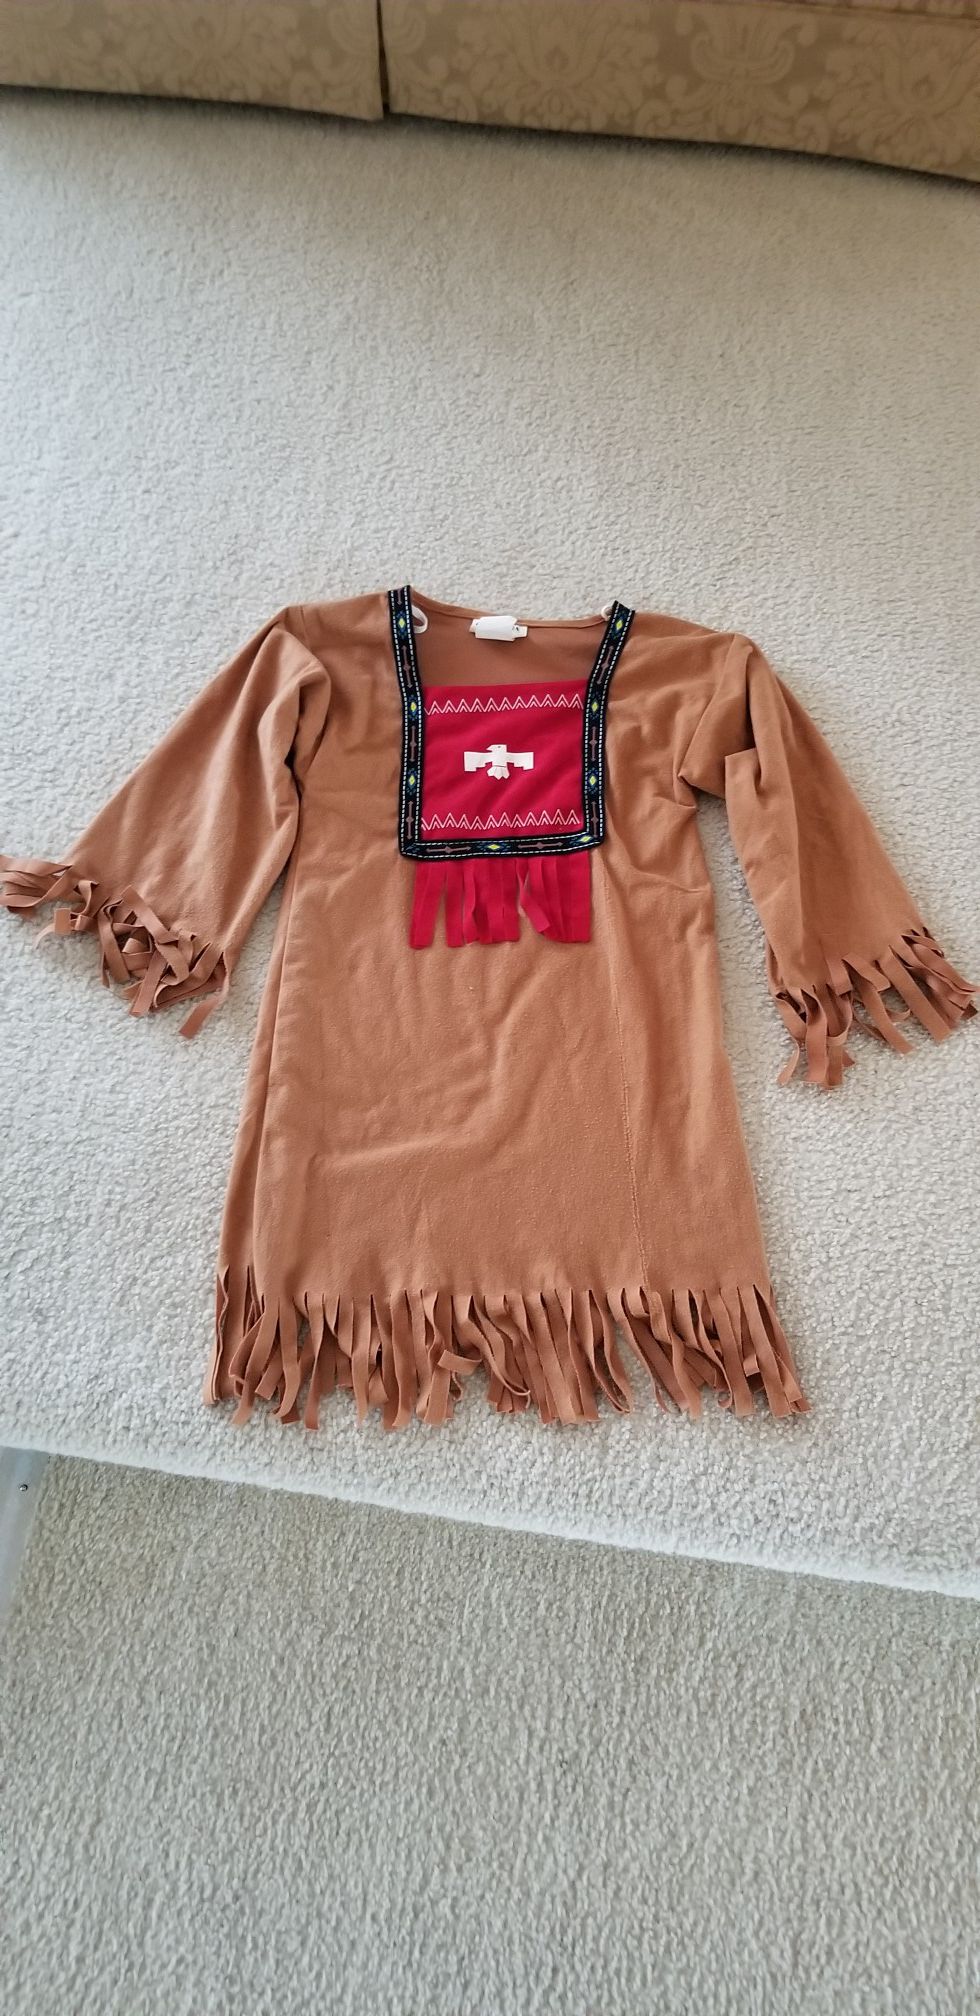 Pocahantas/ Native American costume sz Small